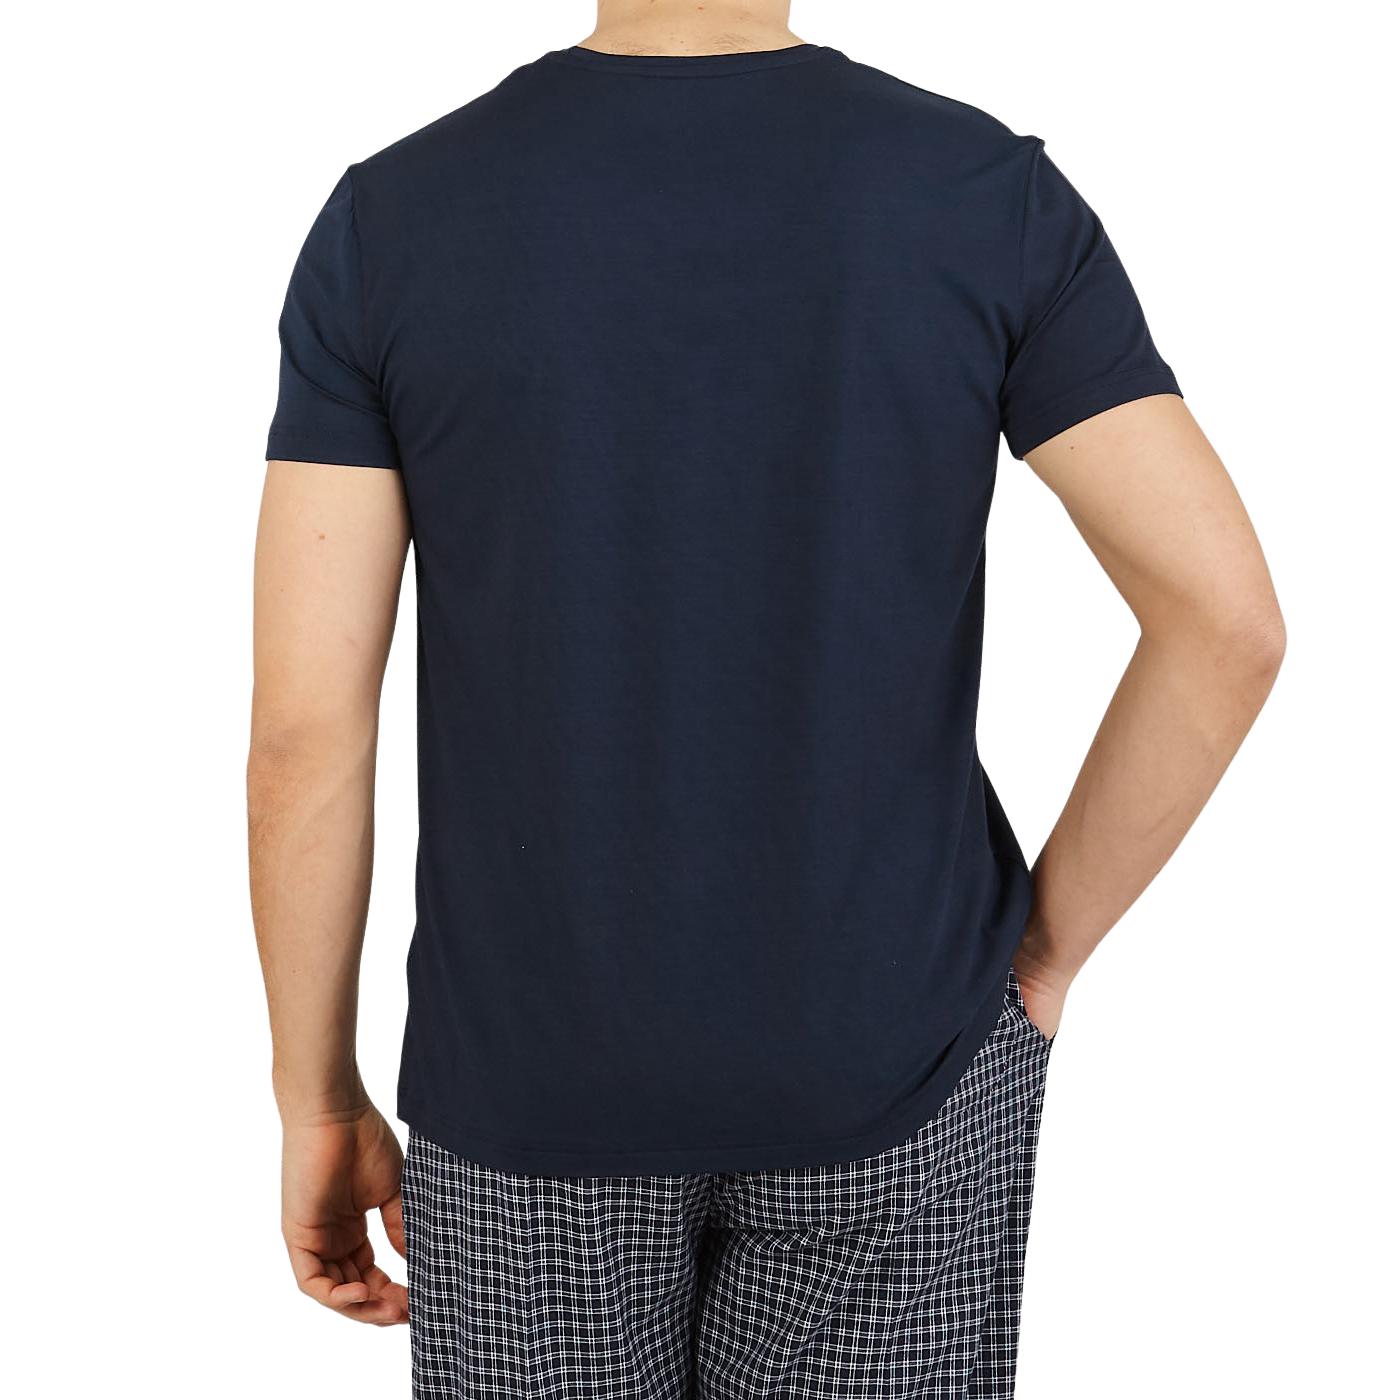 Navy Blue Shirt Back | tyello.com